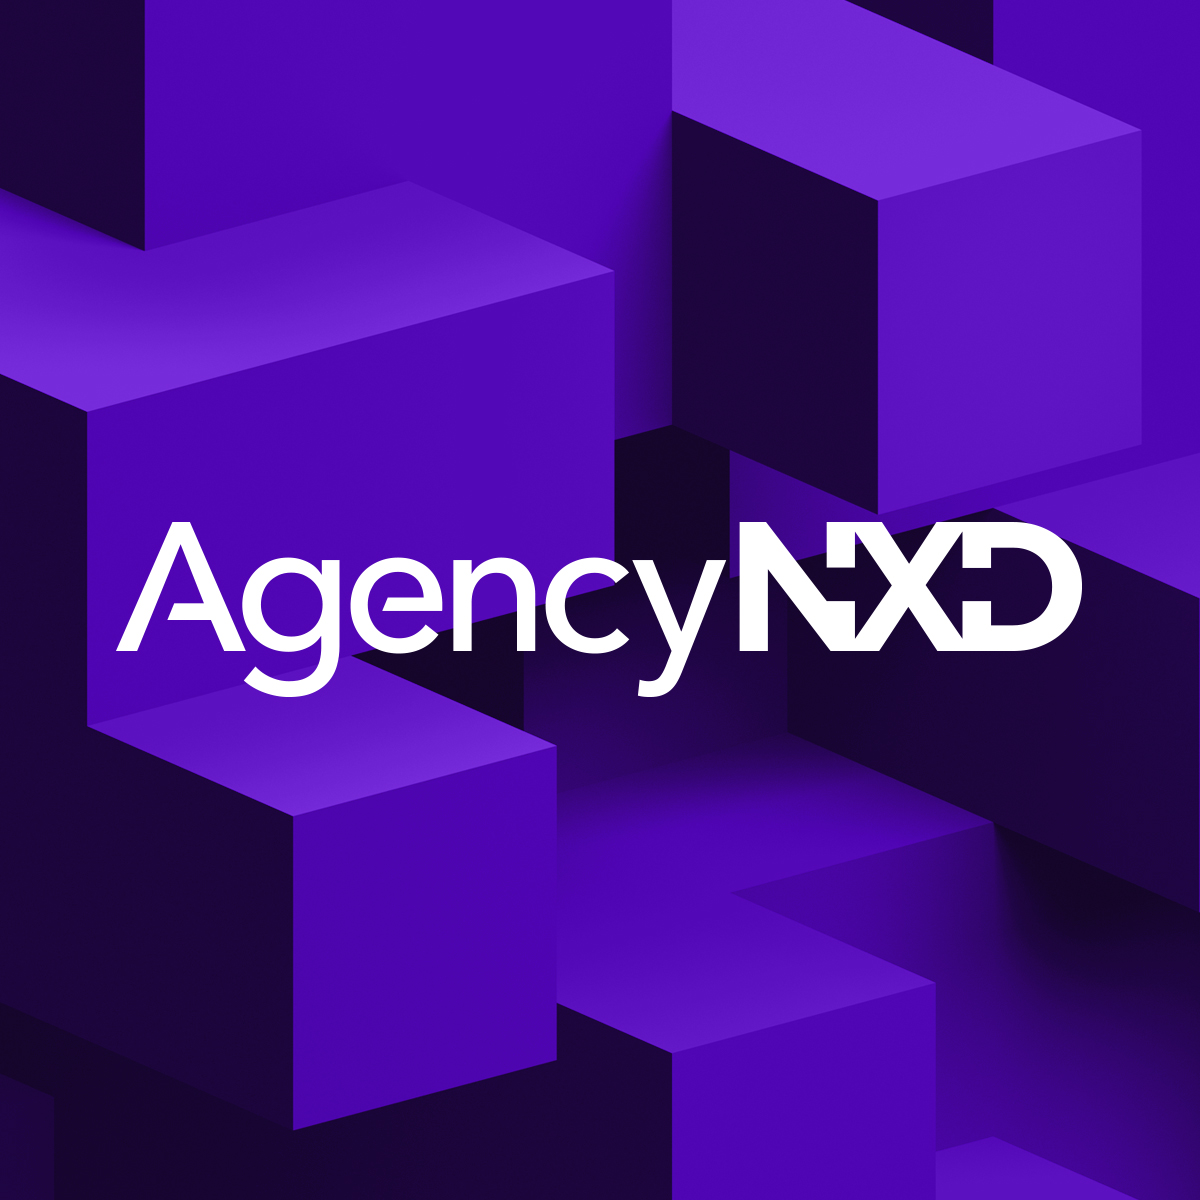 Agency NXD